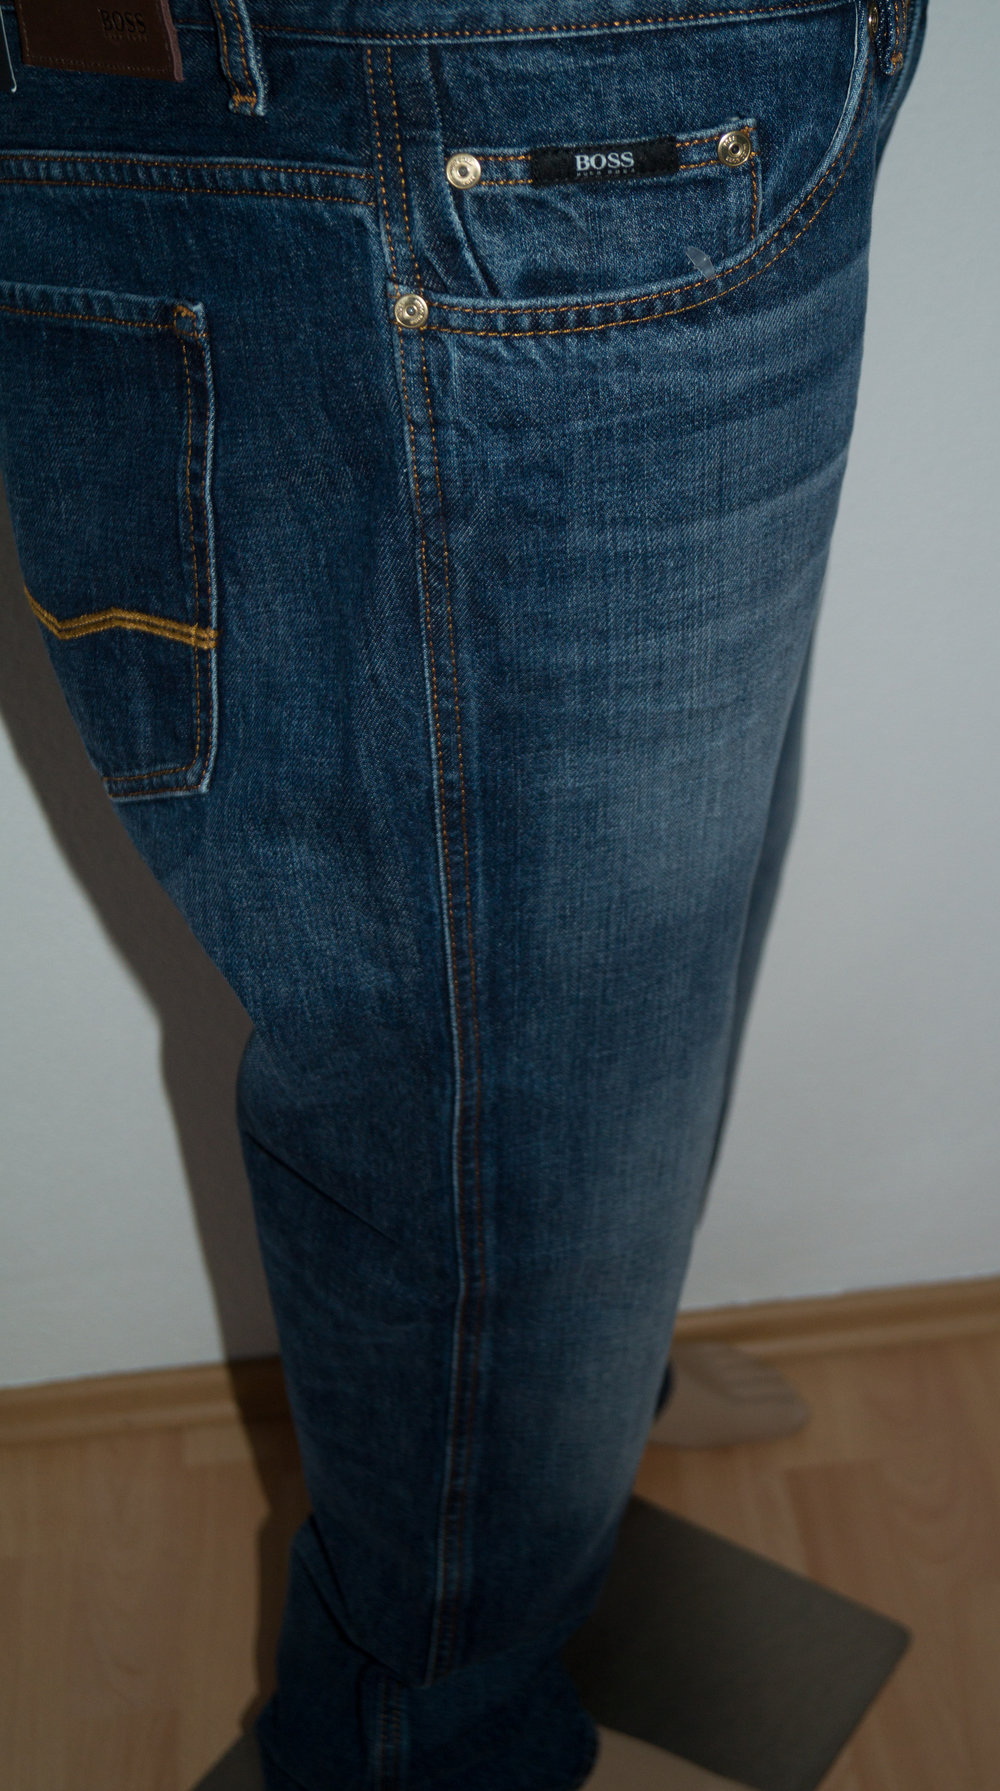 Hugo Boss Herren Jeans - Neu mit Etikett - Gr. 40/32 - UVP 150€